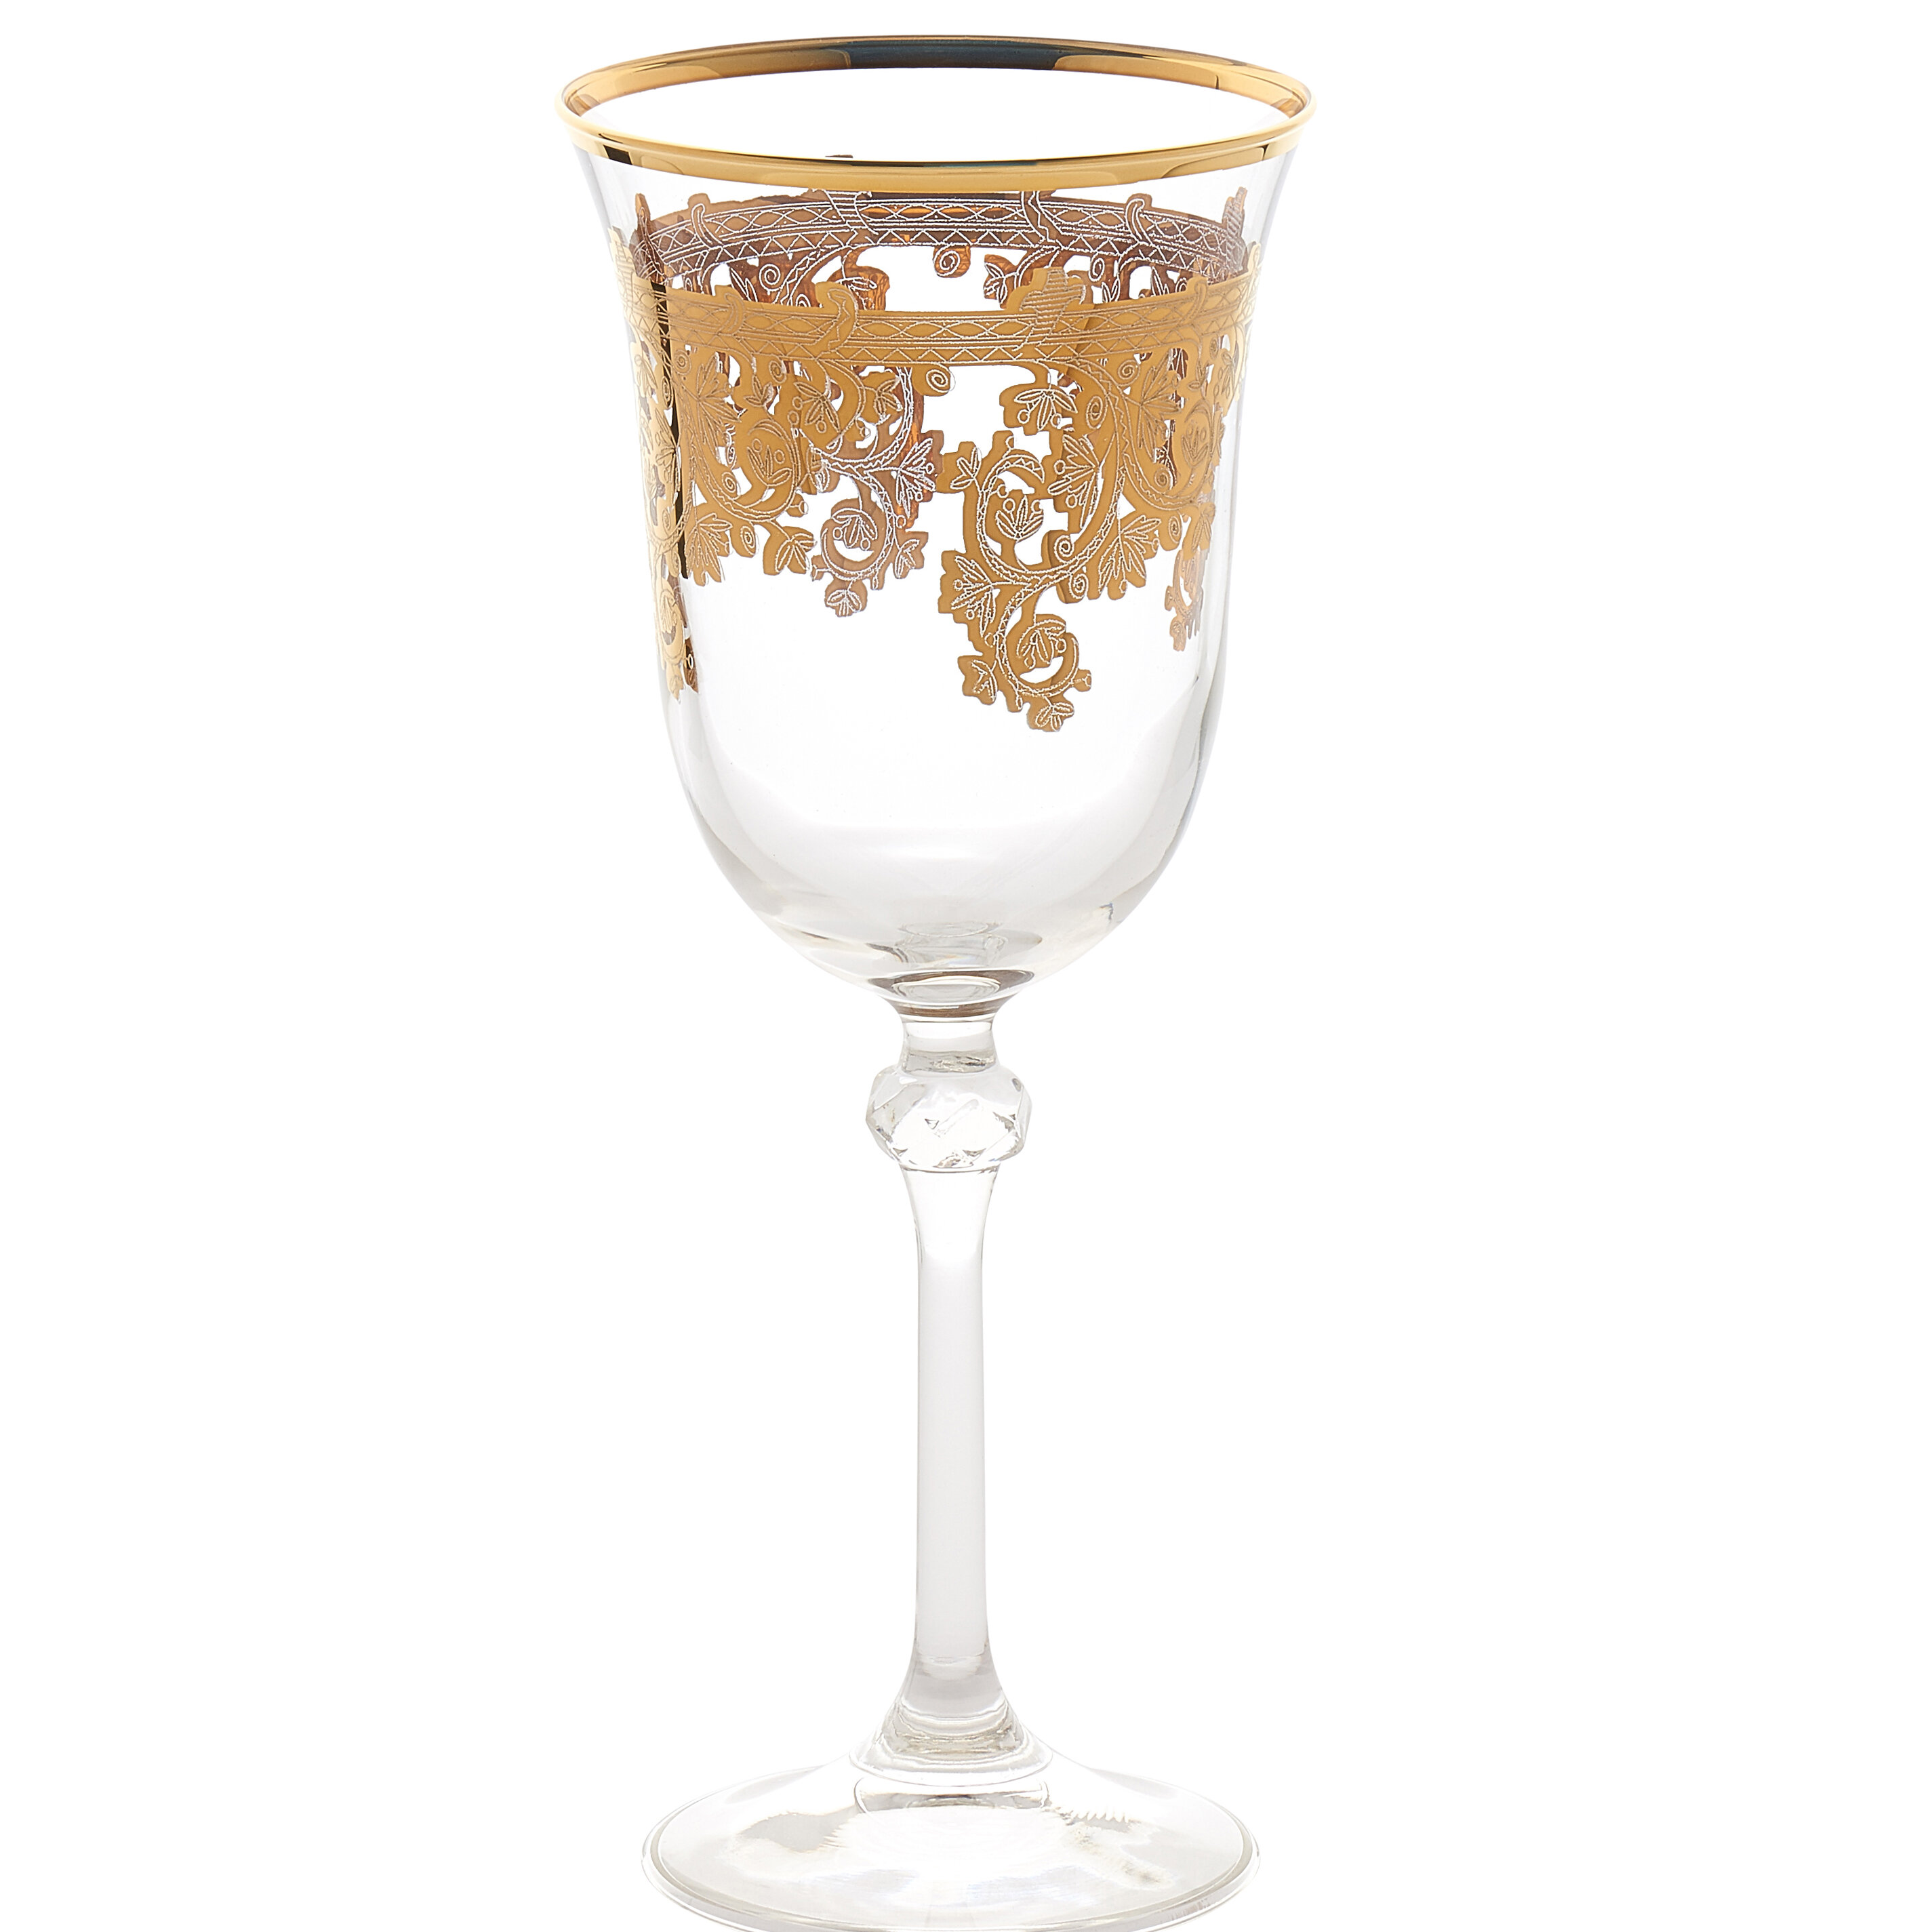 Interglass Italy Crystal Champagne Flutes, Vintage Design 24kt